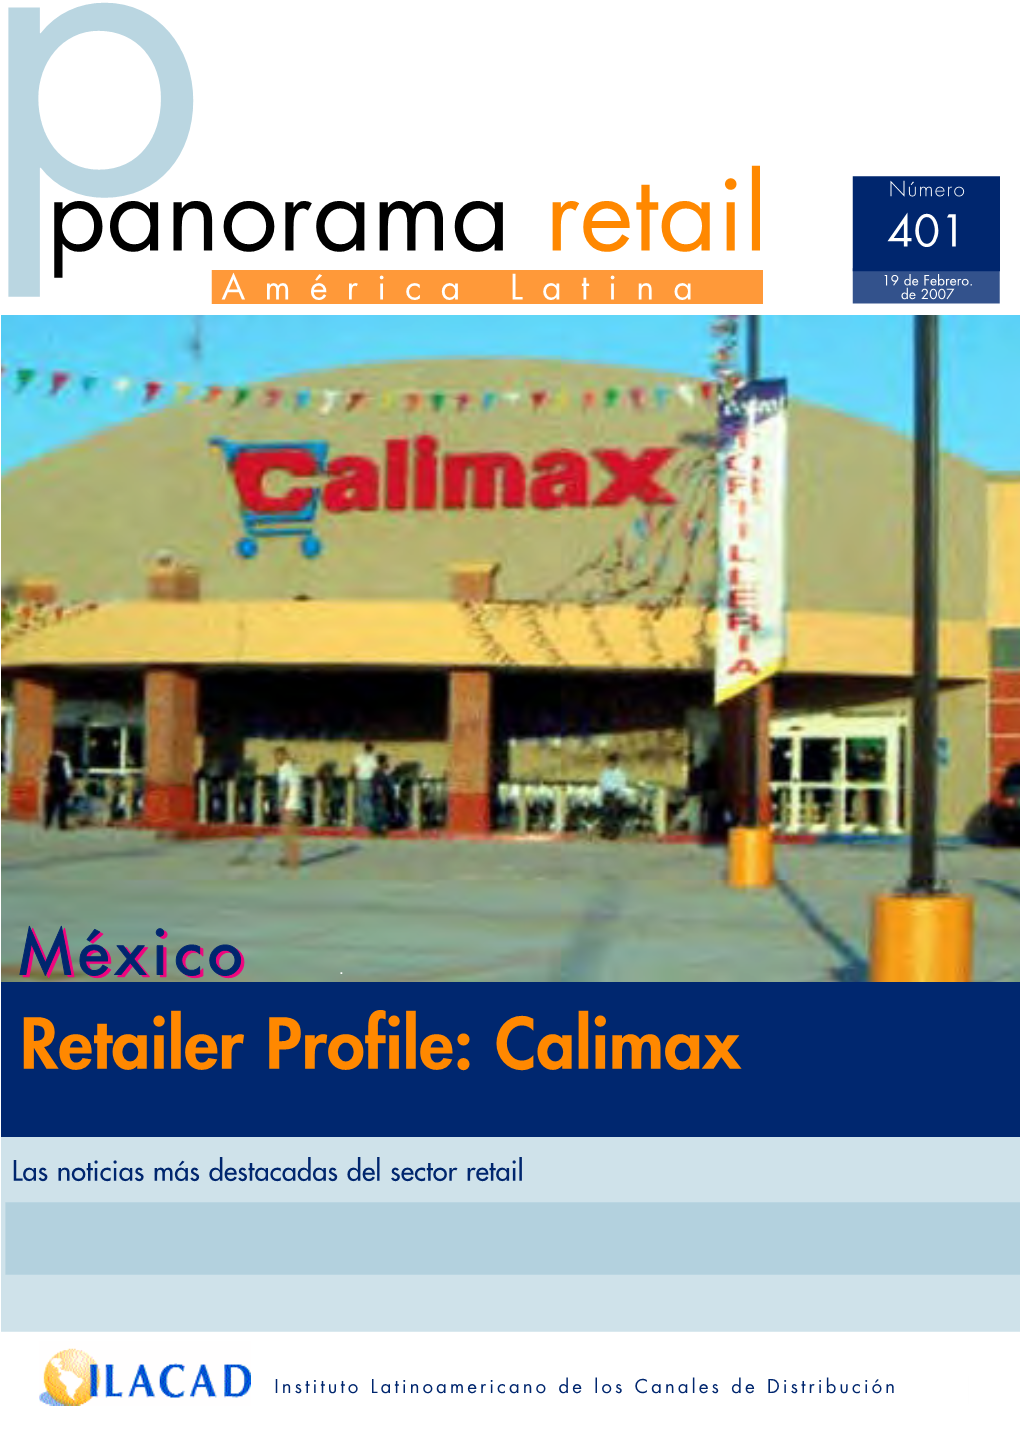 Panorama Retail 401 19 De Febrero